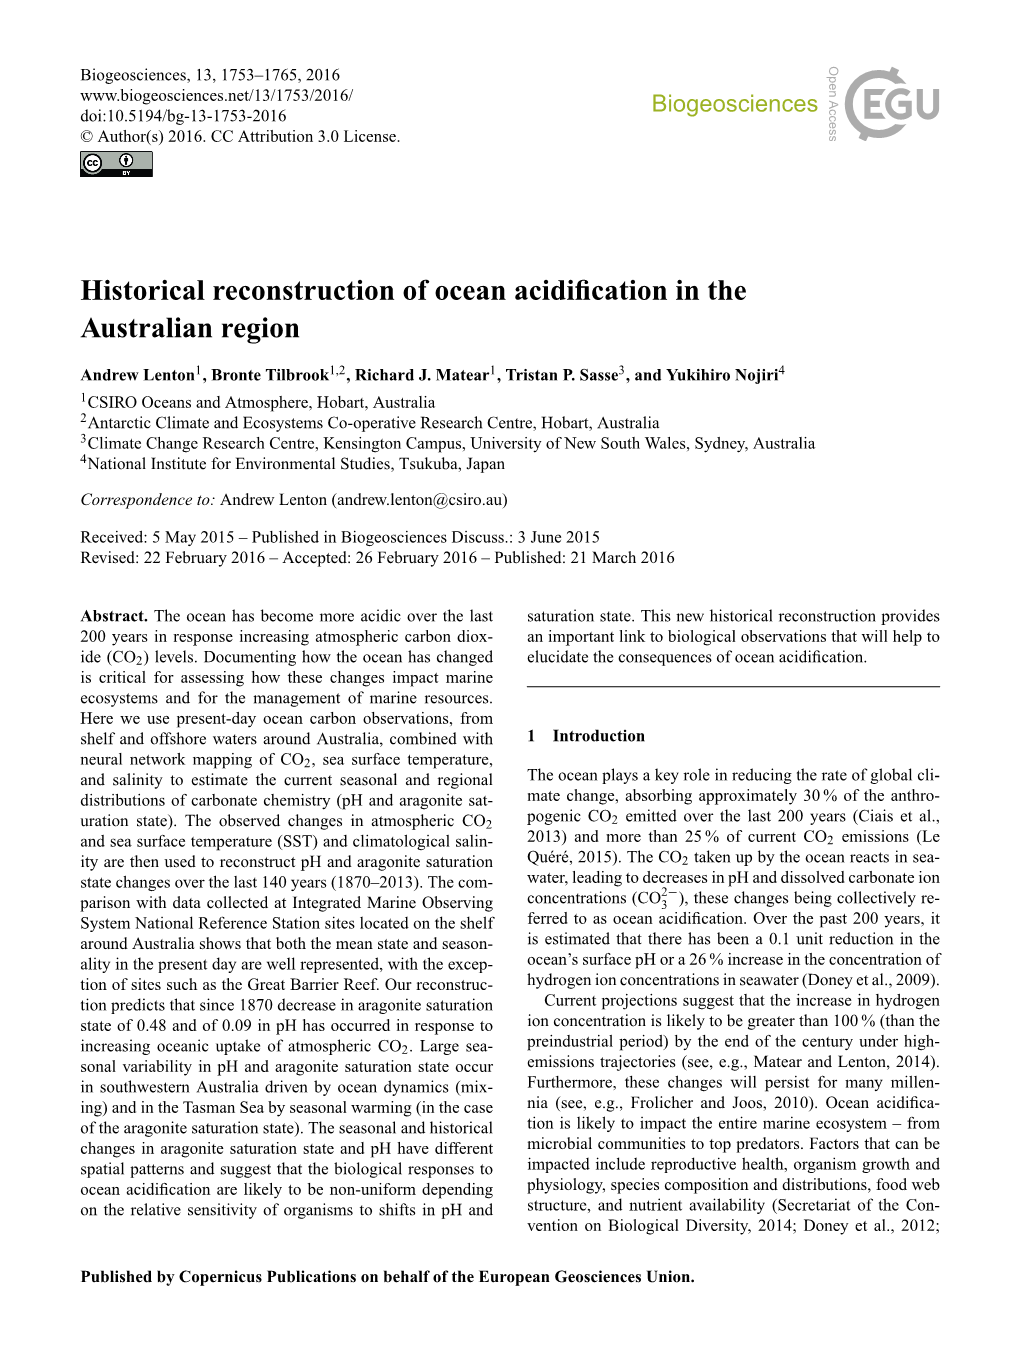 Historical Reconstruction of Ocean Acidification in the Australian Region